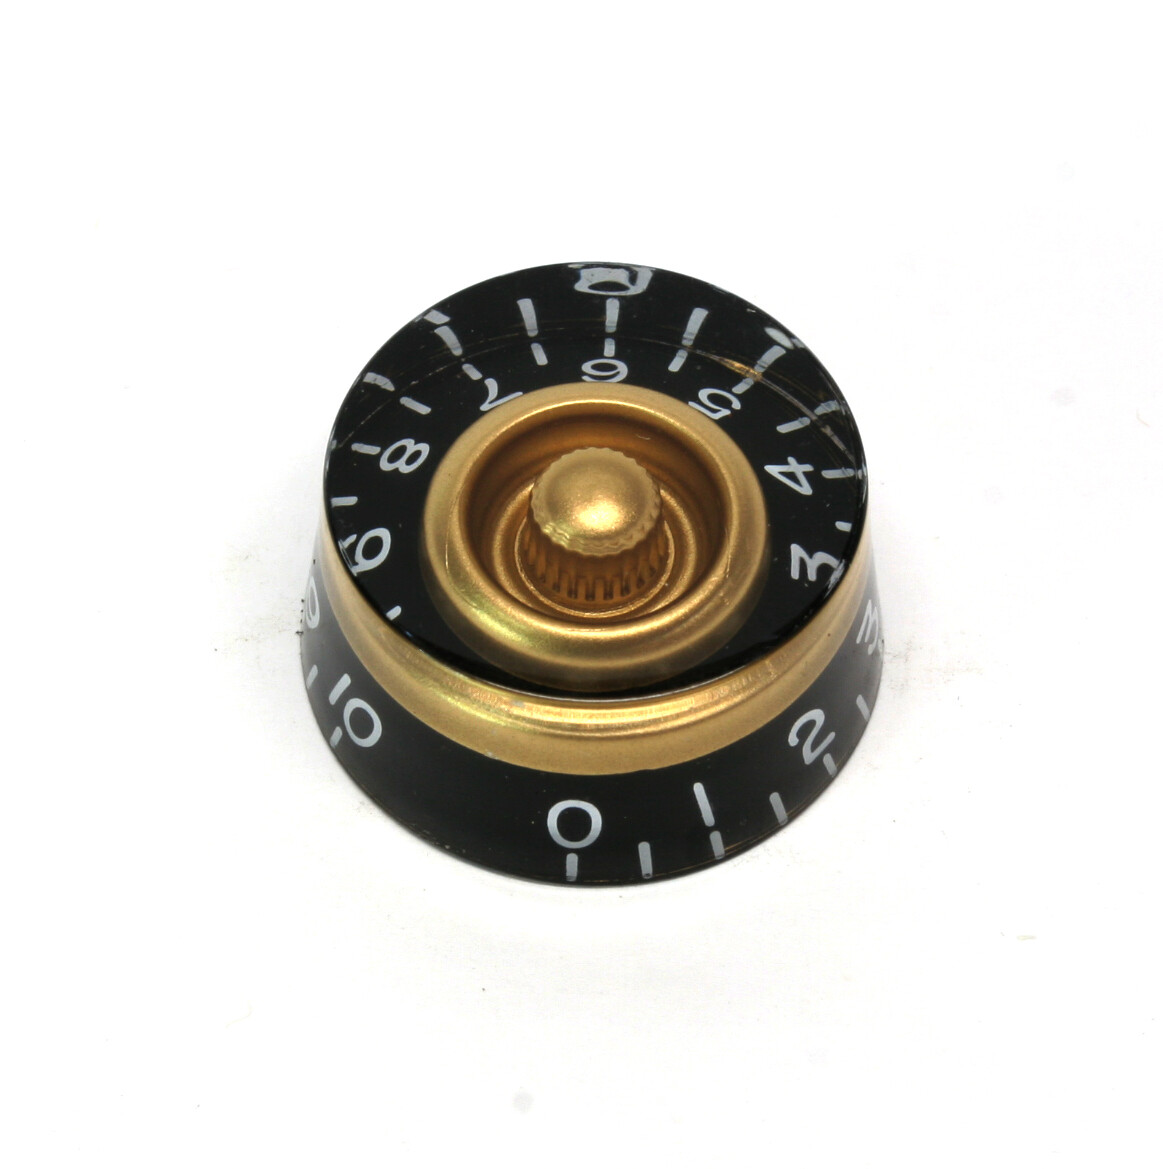 1 x Black/Gold Speed knob vintage style numbers, fits USA split shaft pots.